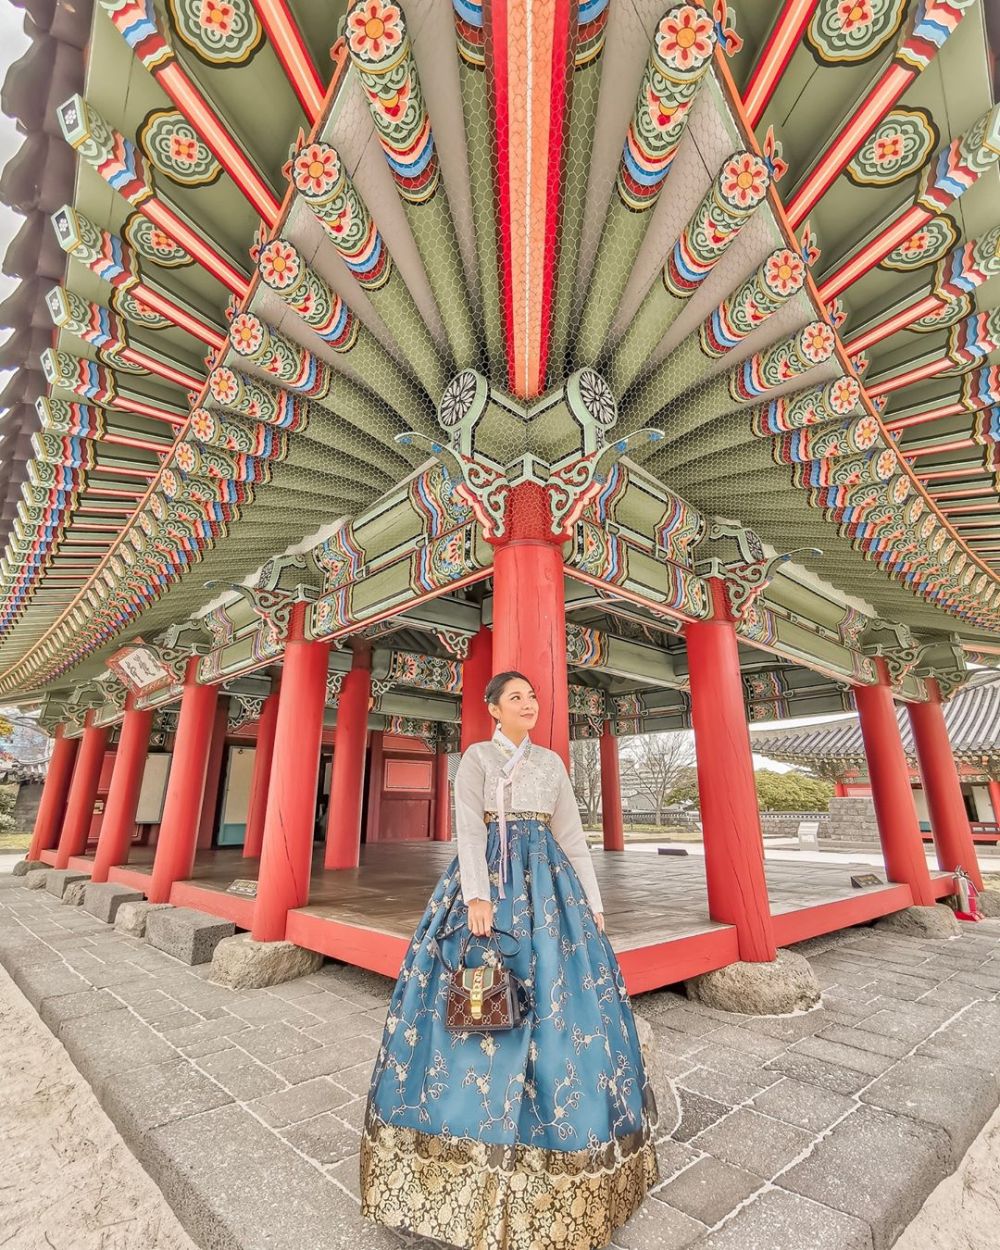 Potret 15 seleb cantik Indonesia pakai baju khas Korea  